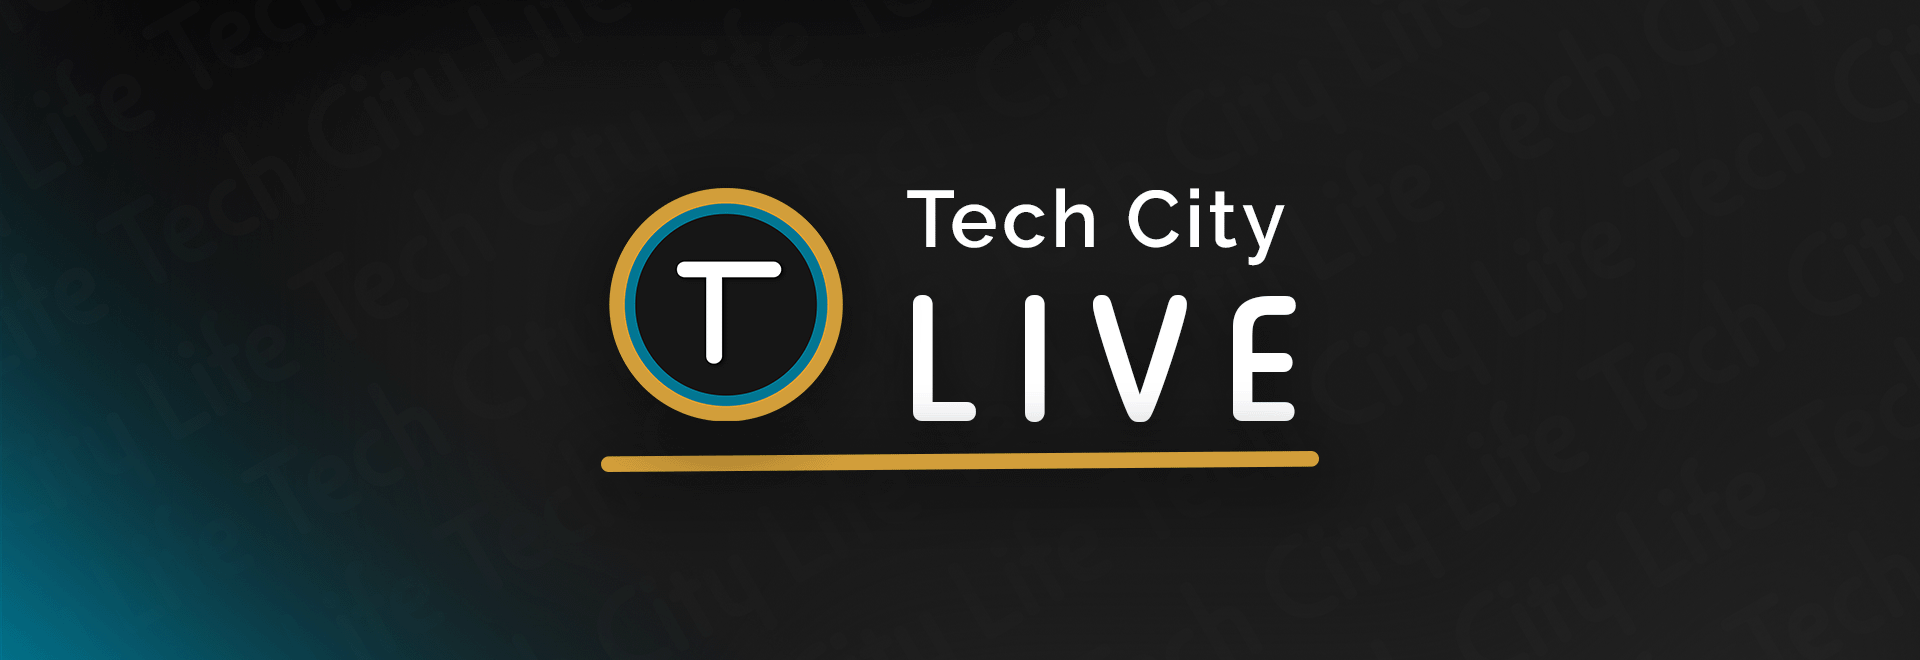 Tech City LIVE: Januar Update